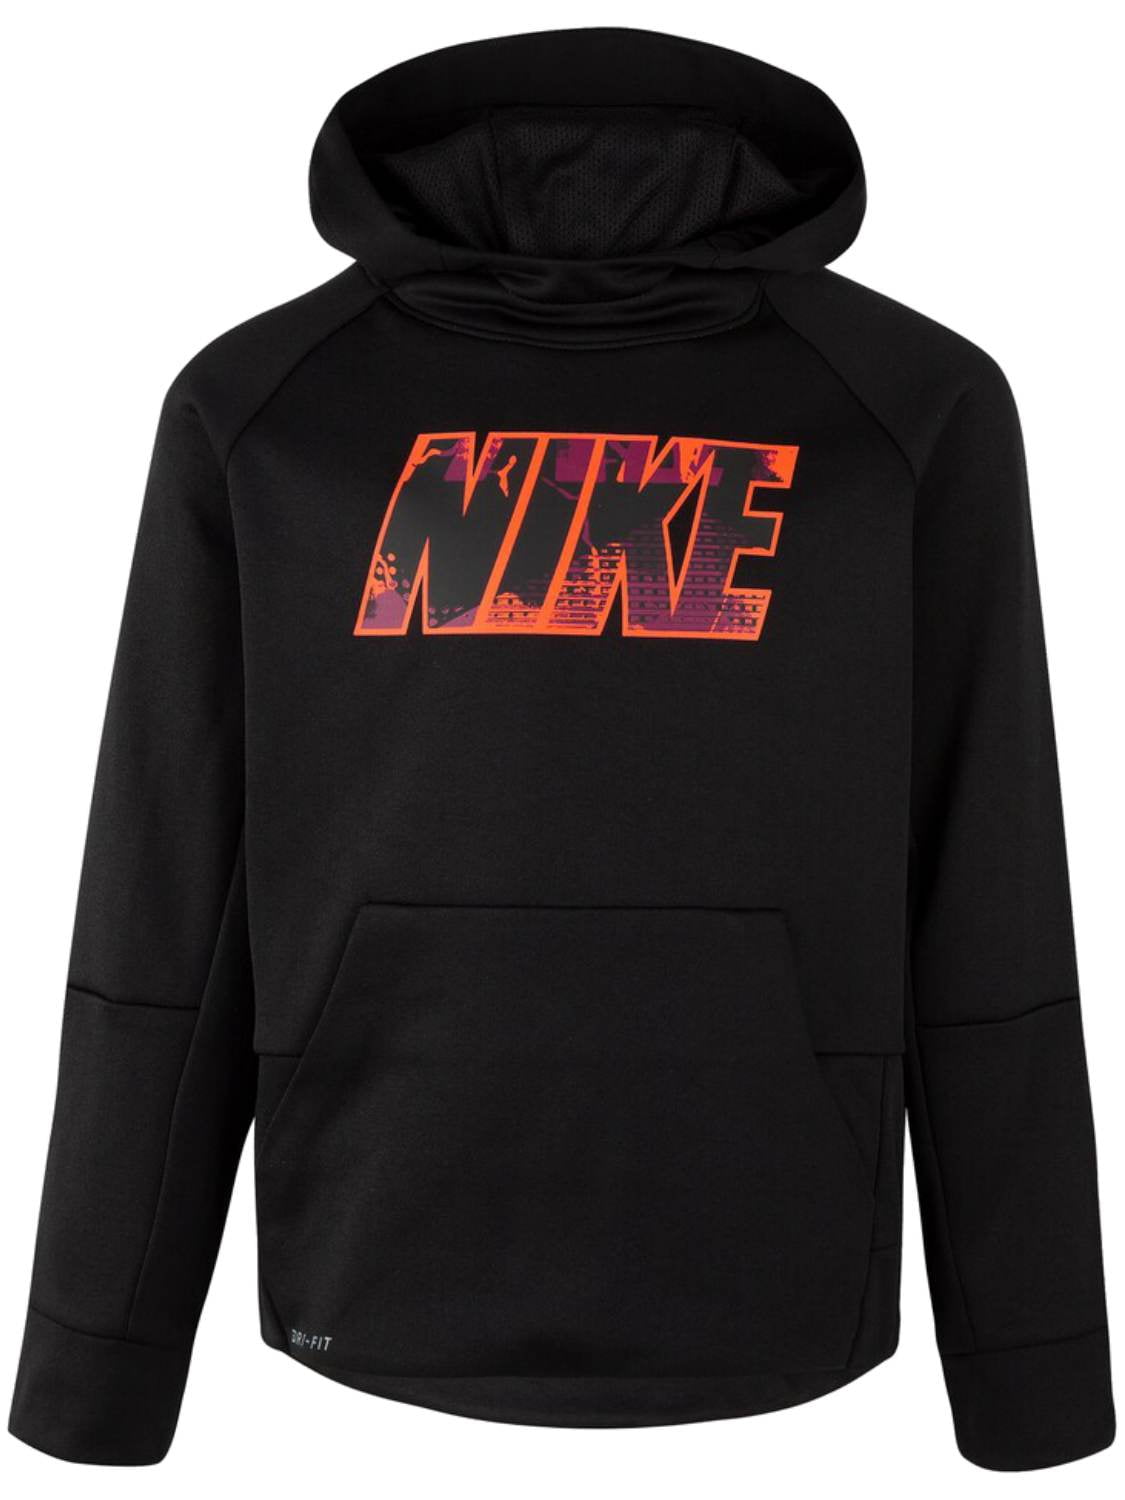 Nike Therma Boys Black Neon Hoodie Sweatshirt Dri-Fit Jacket XS (4) - Walmart.com